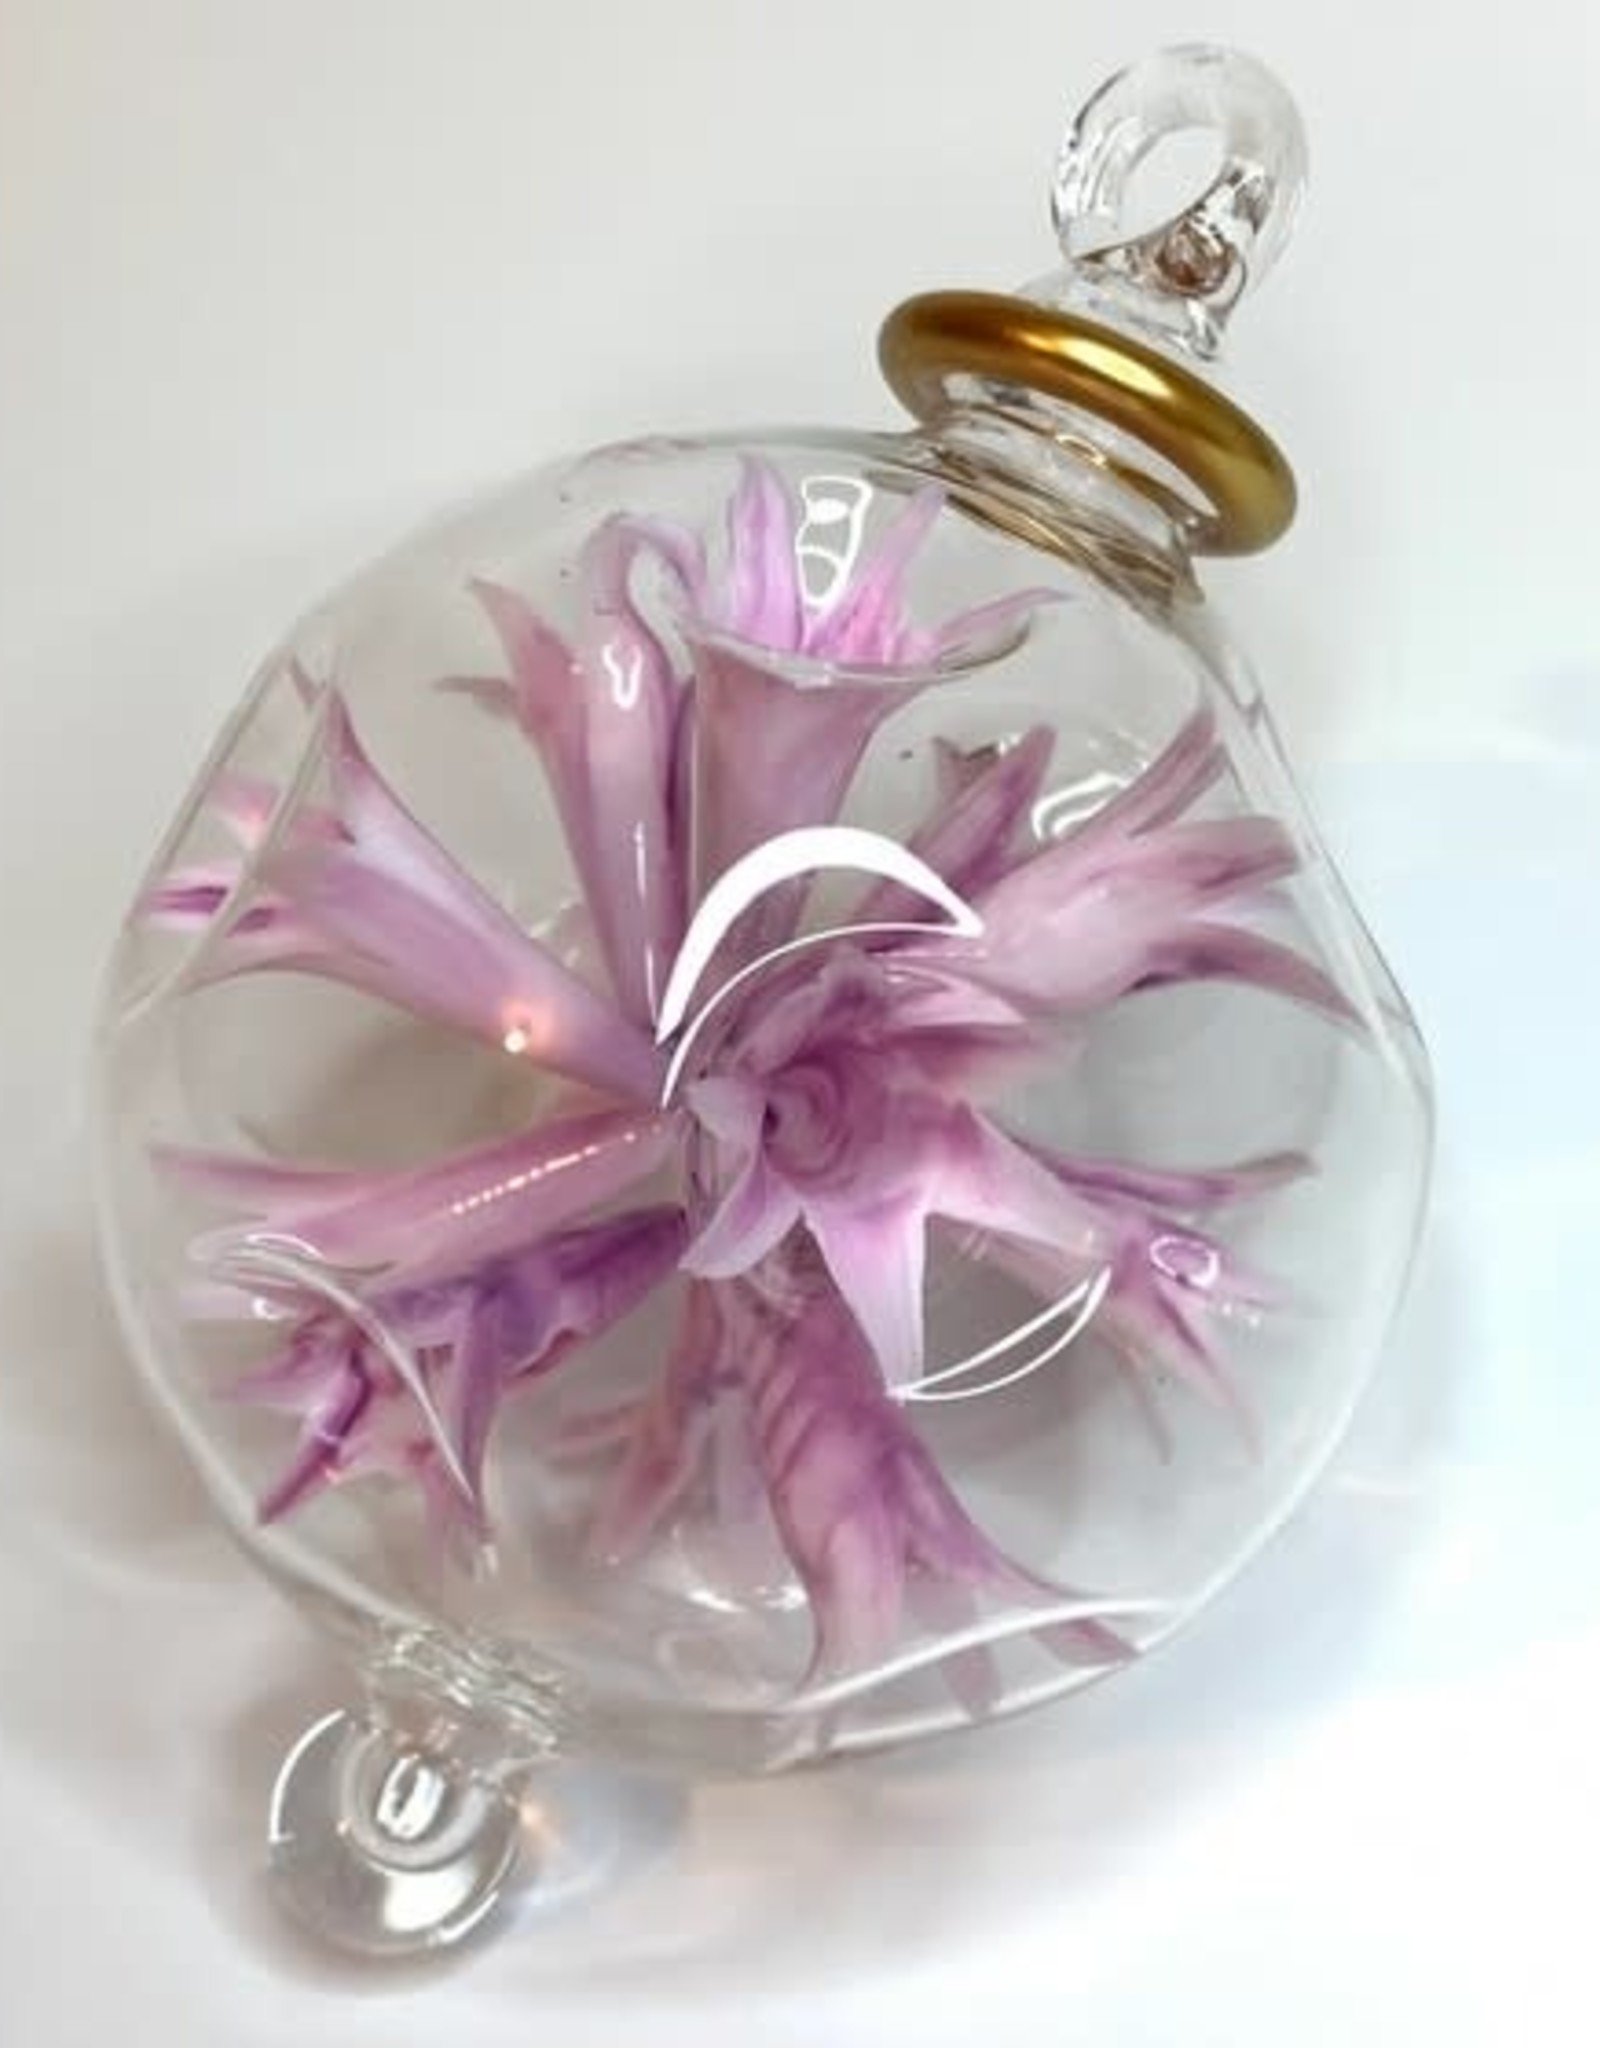 Dandarah Blown Glass Ornament - Lilac Blossoms